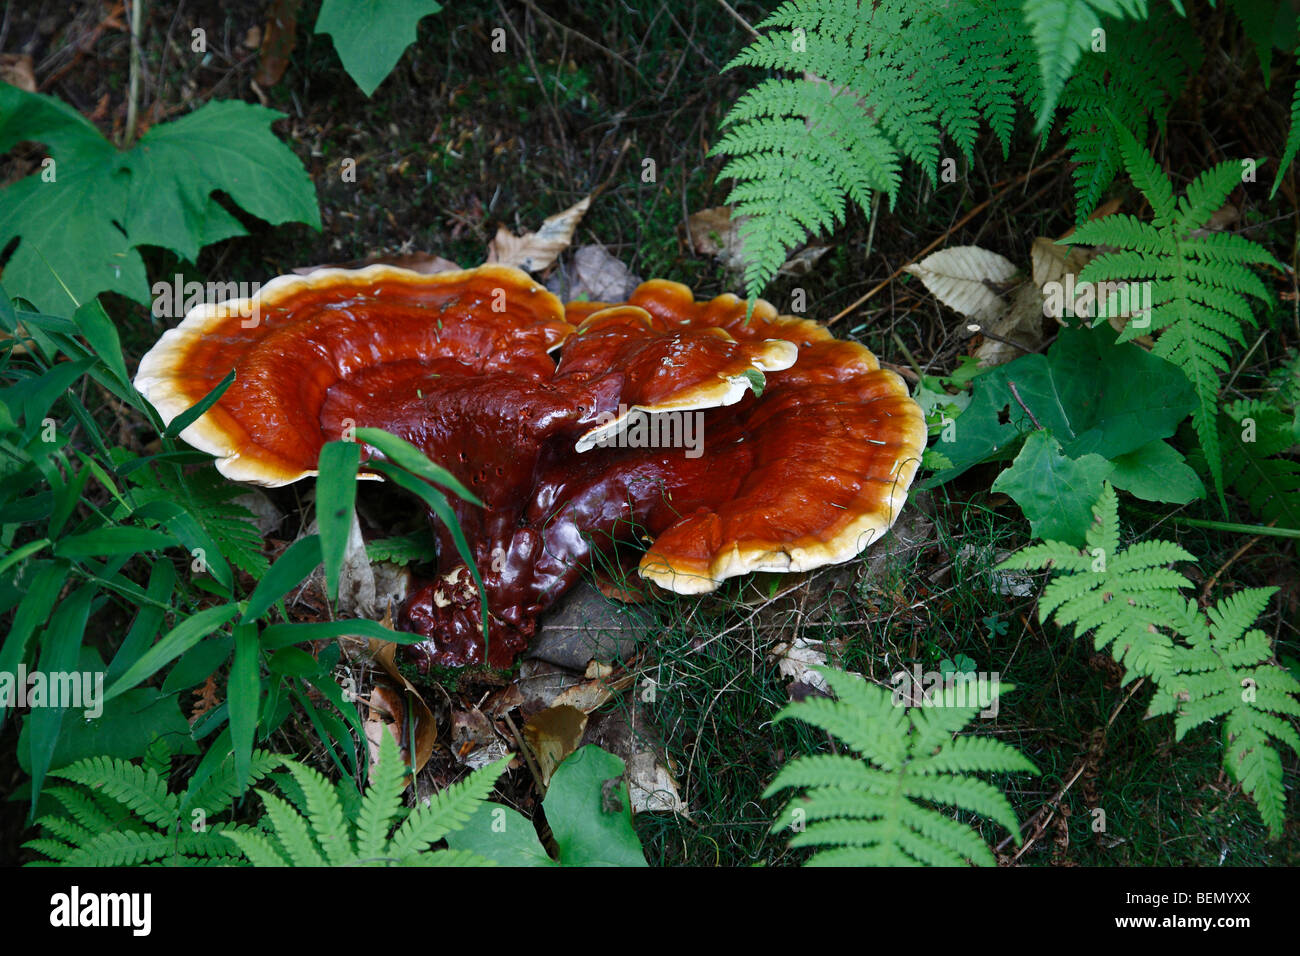 Ling Chih mushroom Ganoderma lucidum found in Michigan USA Reishi edible mushrooms nobody photos green nature is inspiration hi-res Stock Photo